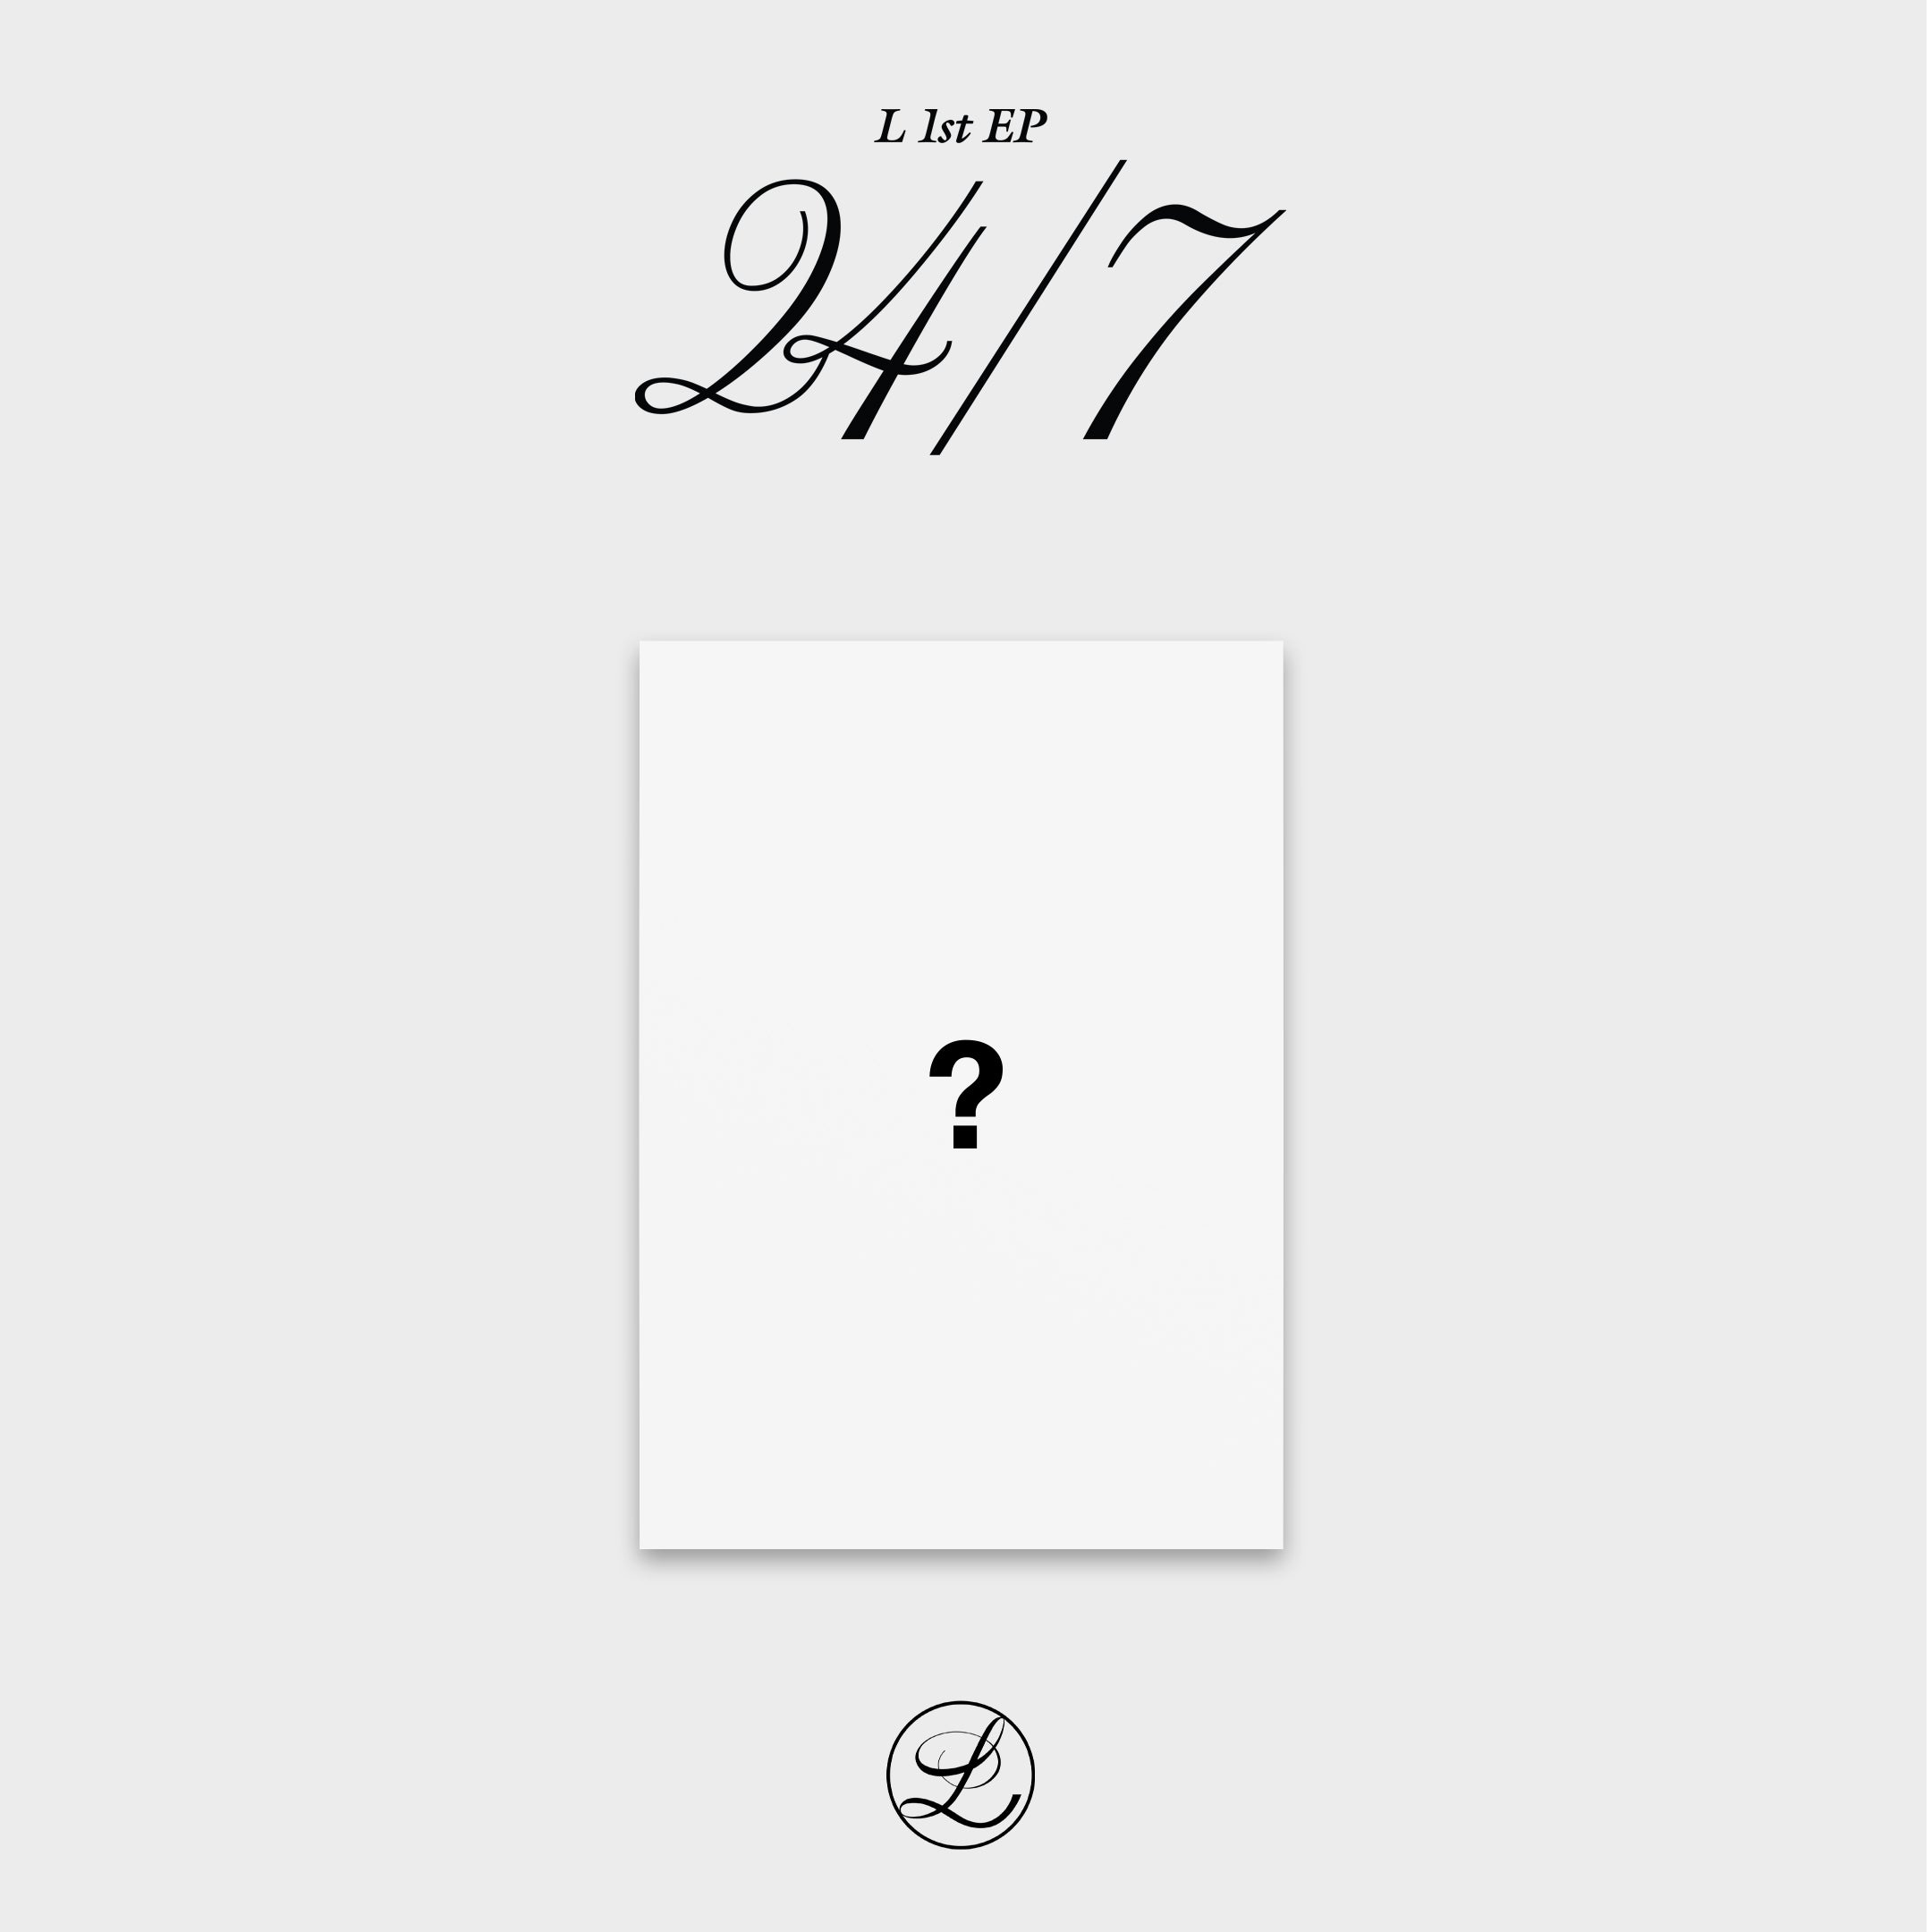 L - 1st EP [24/7] Rising Ver.